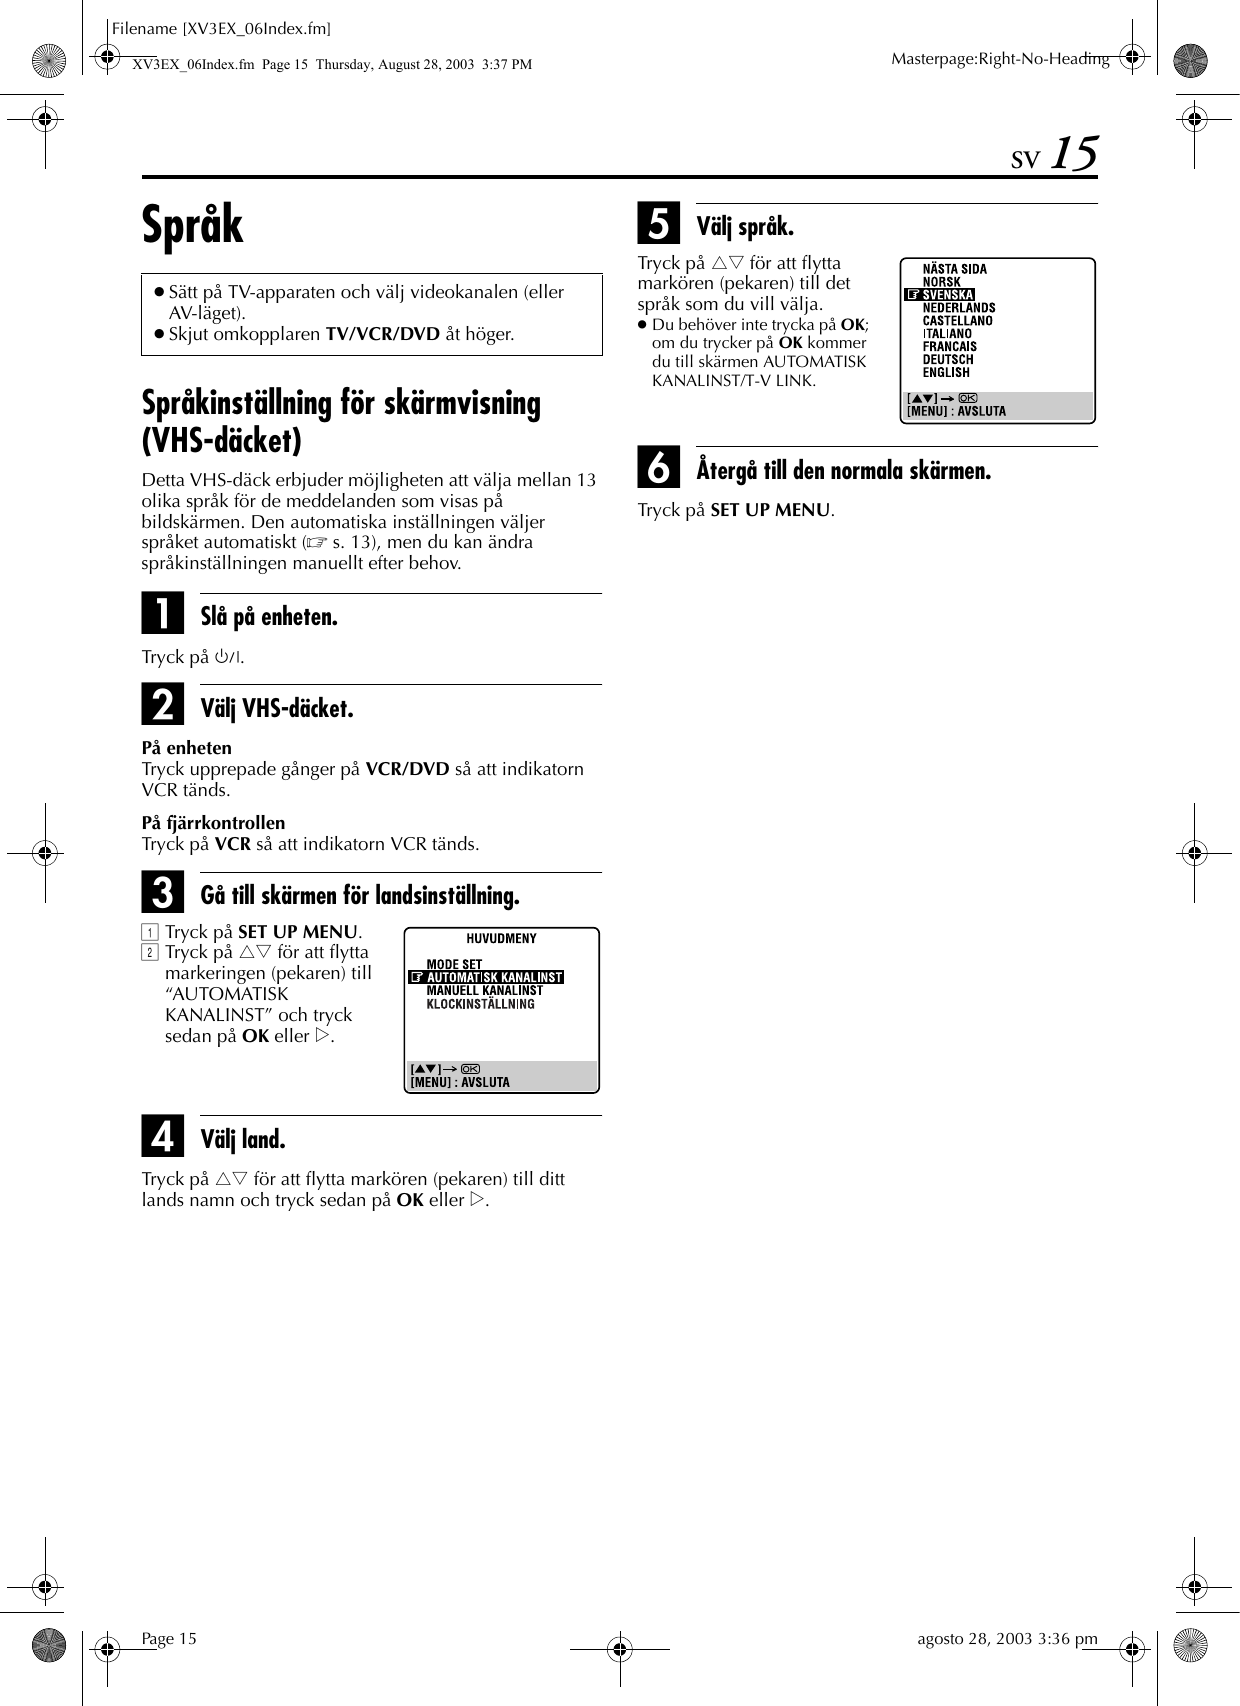 JVC HR XV3E User Manual LPT0864 009A